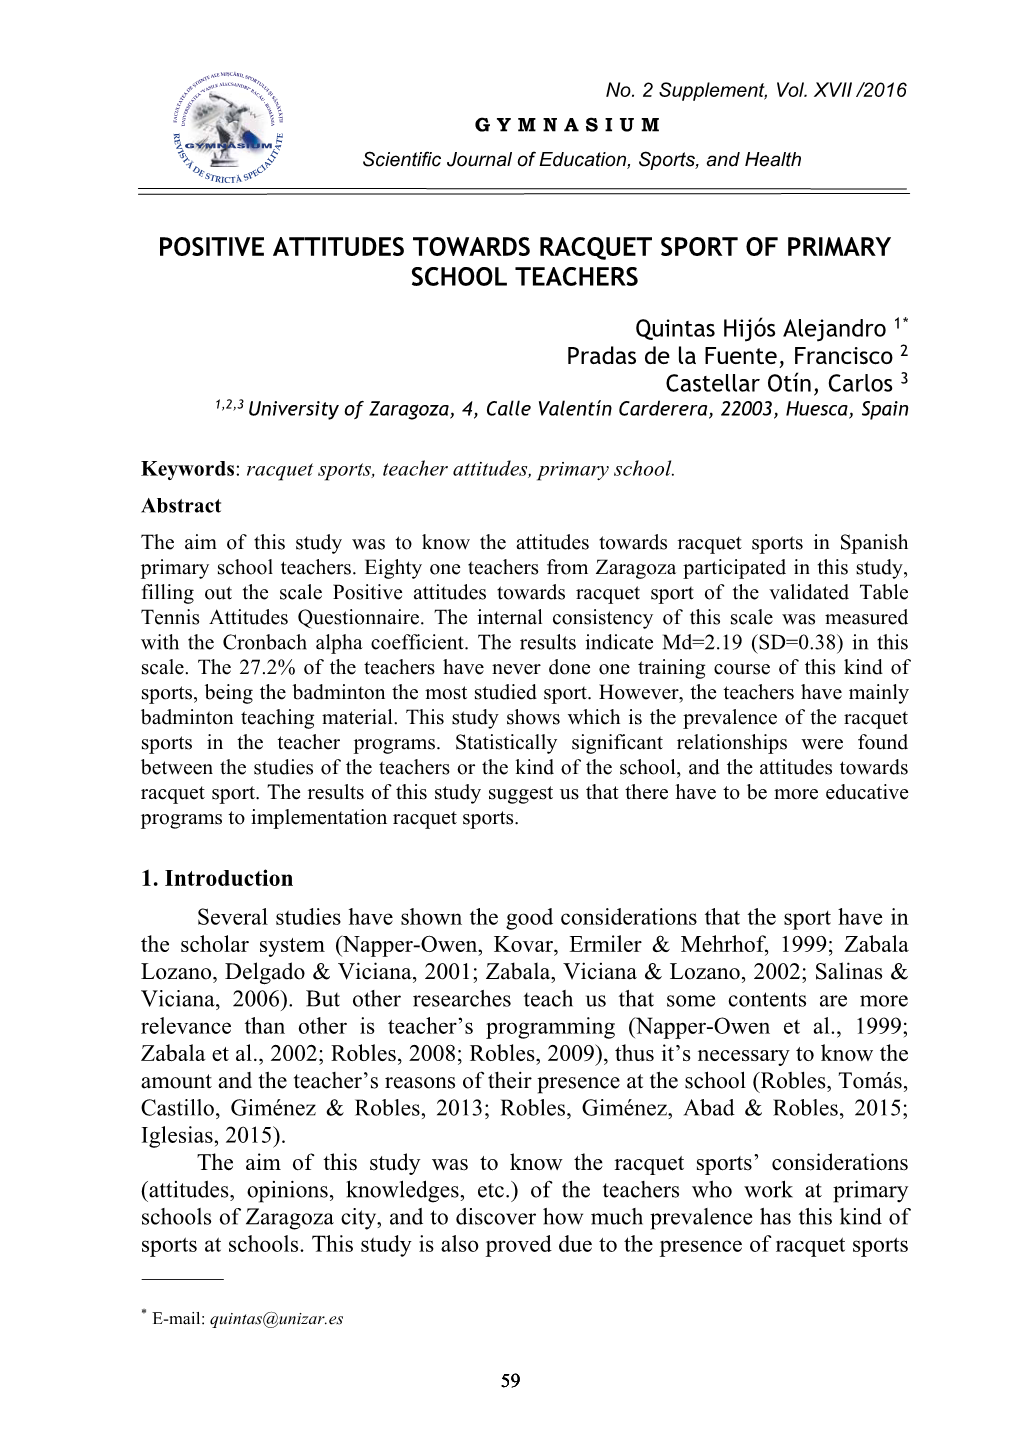 Positive Attitudes Towards Racquet Sport of Primary School Teachers